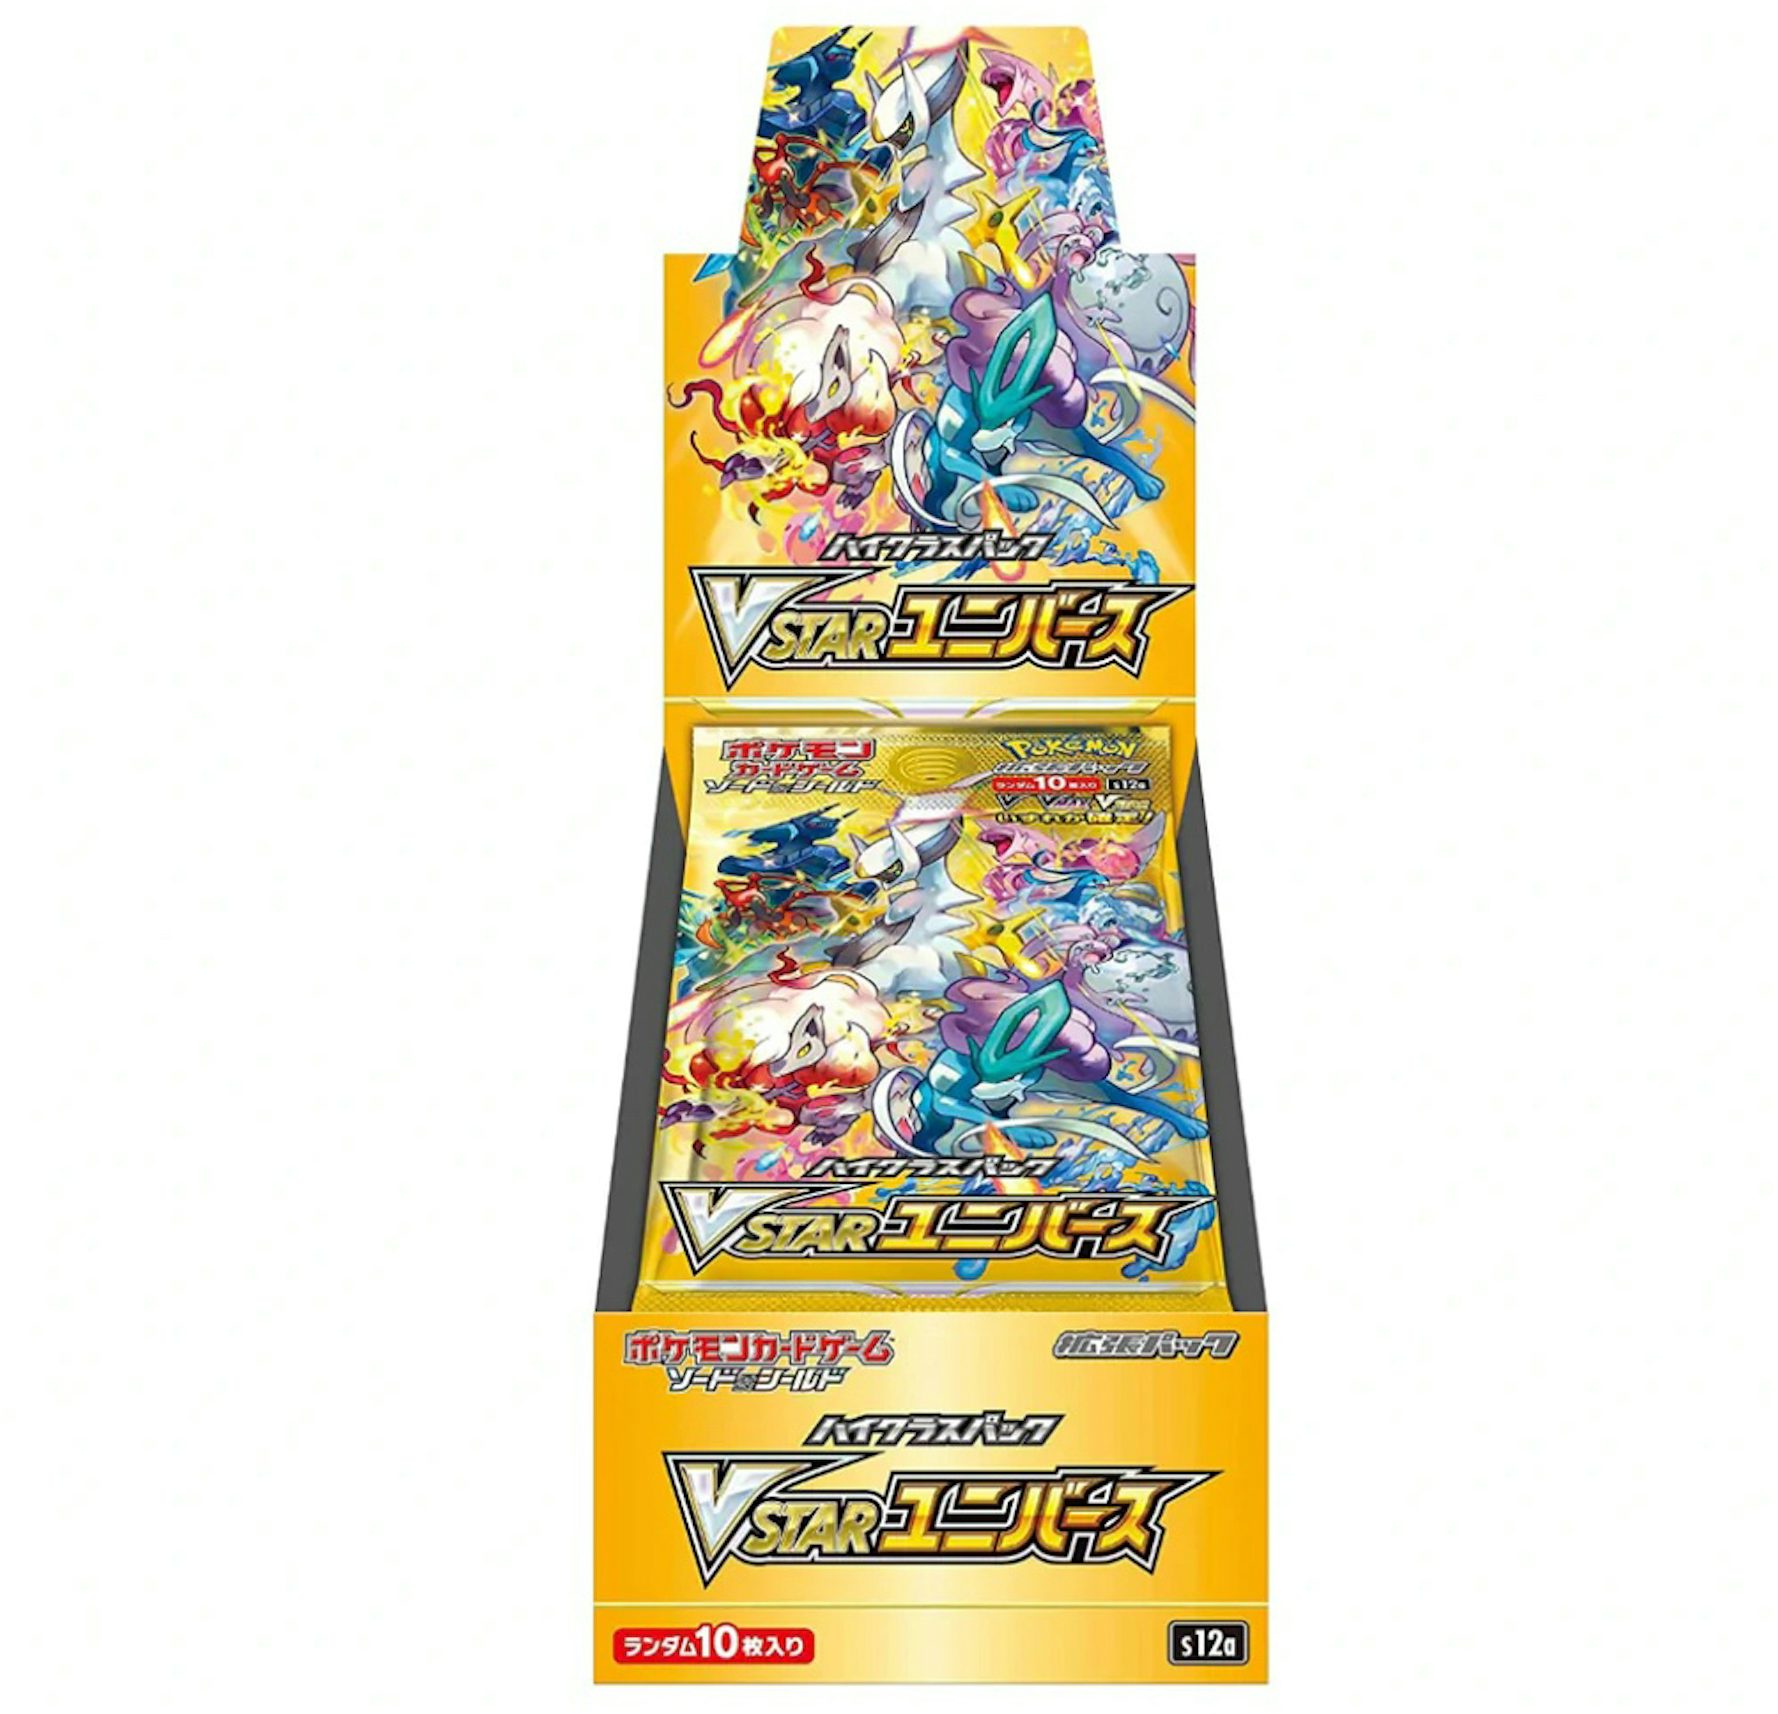 Pokémon TCG Sword & Shield VSTAR & VMAX Deoxys High Class Deck (Japanese)  4x Lot - US